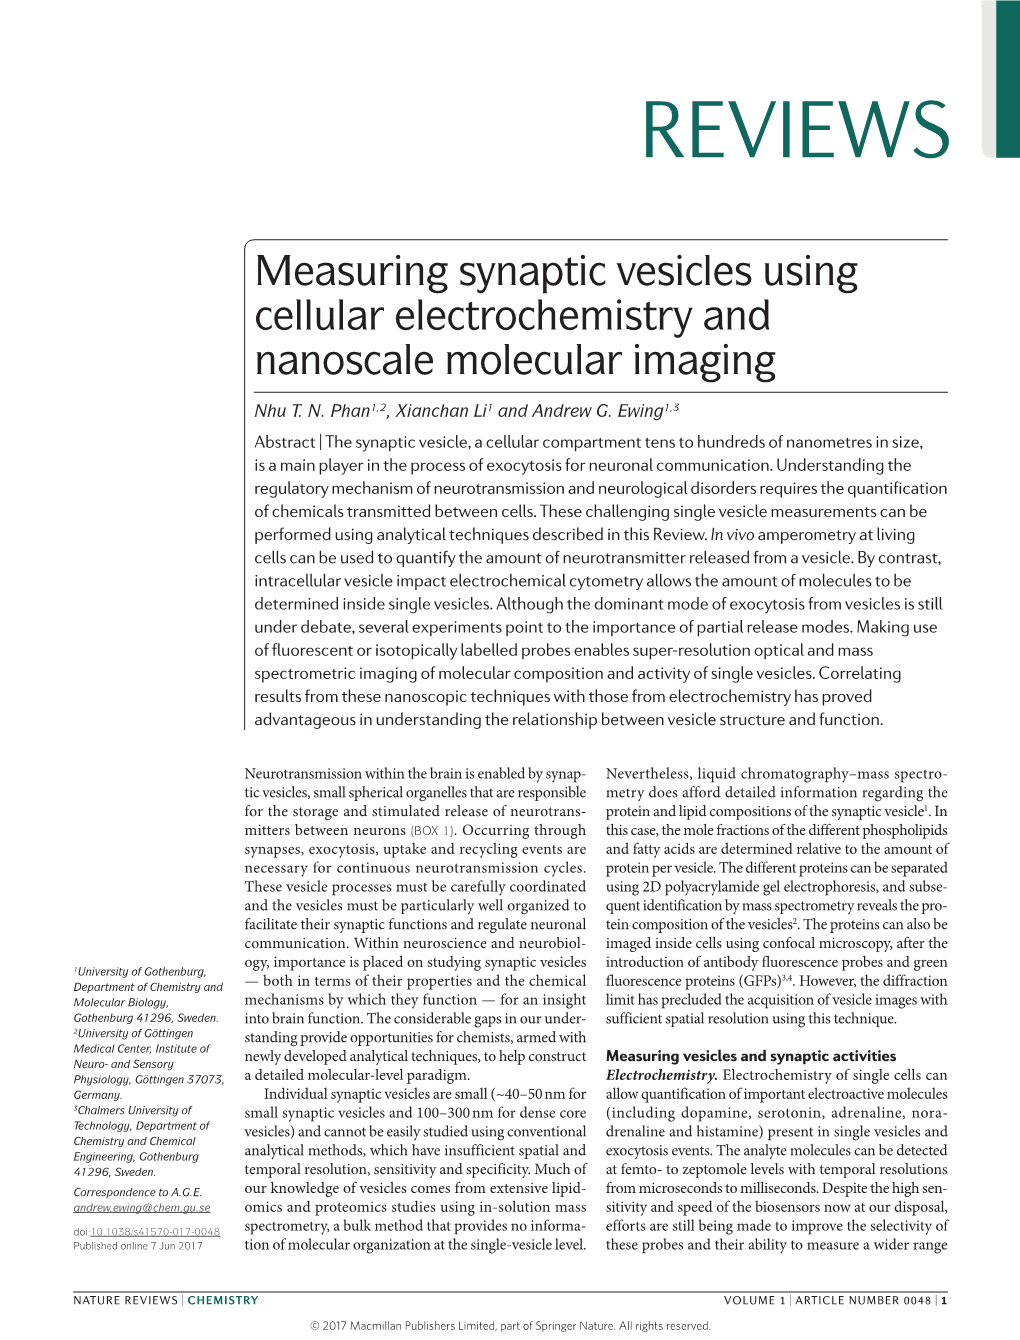 Measuring Synaptic Vesicles Using Cellular Electrochemistry and Nanoscale Molecular Imaging